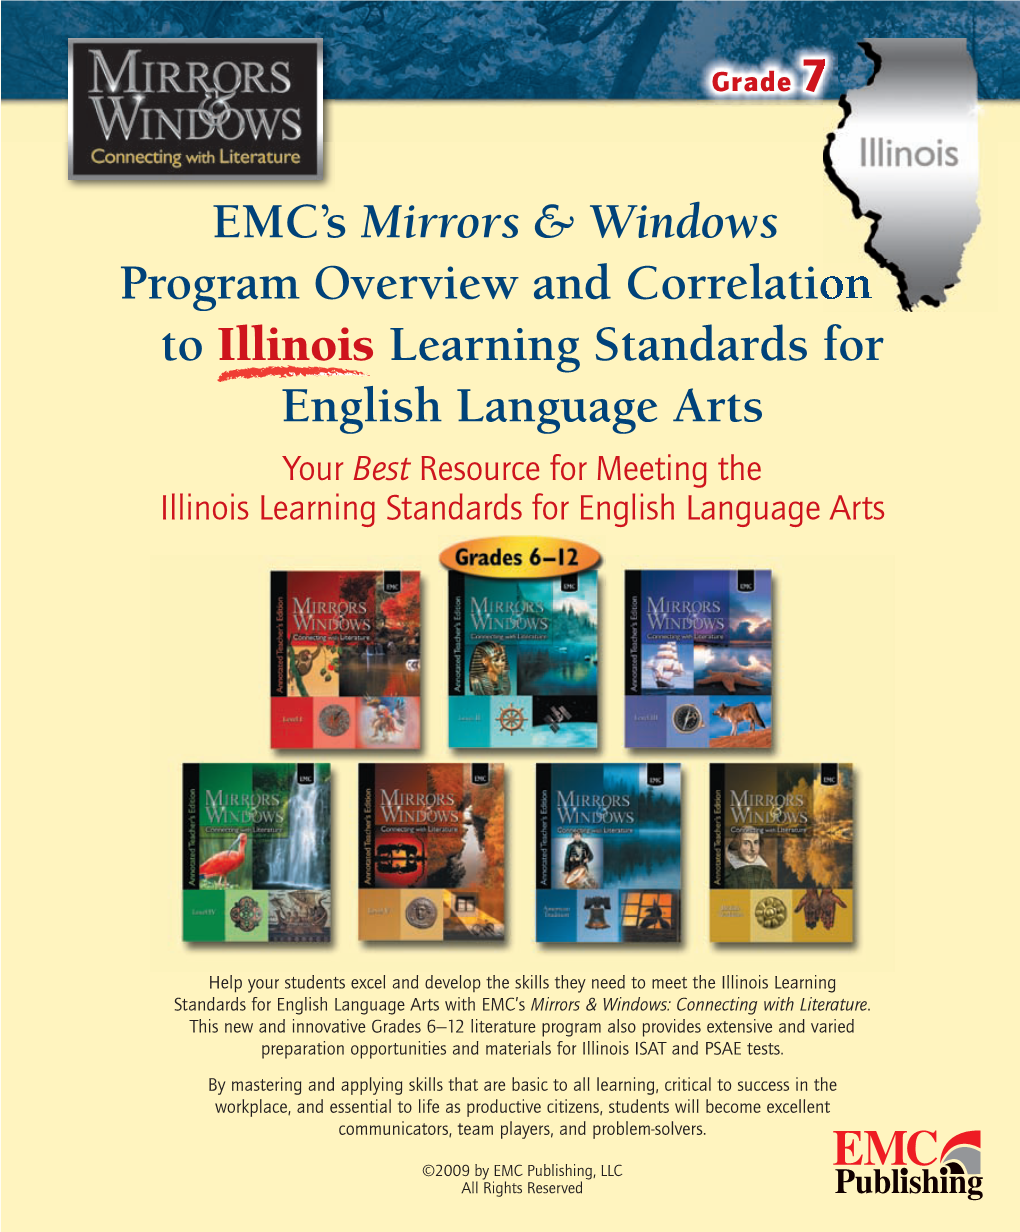 EMC's Mirrors & Windows Program Overview and Correlation to Illinois